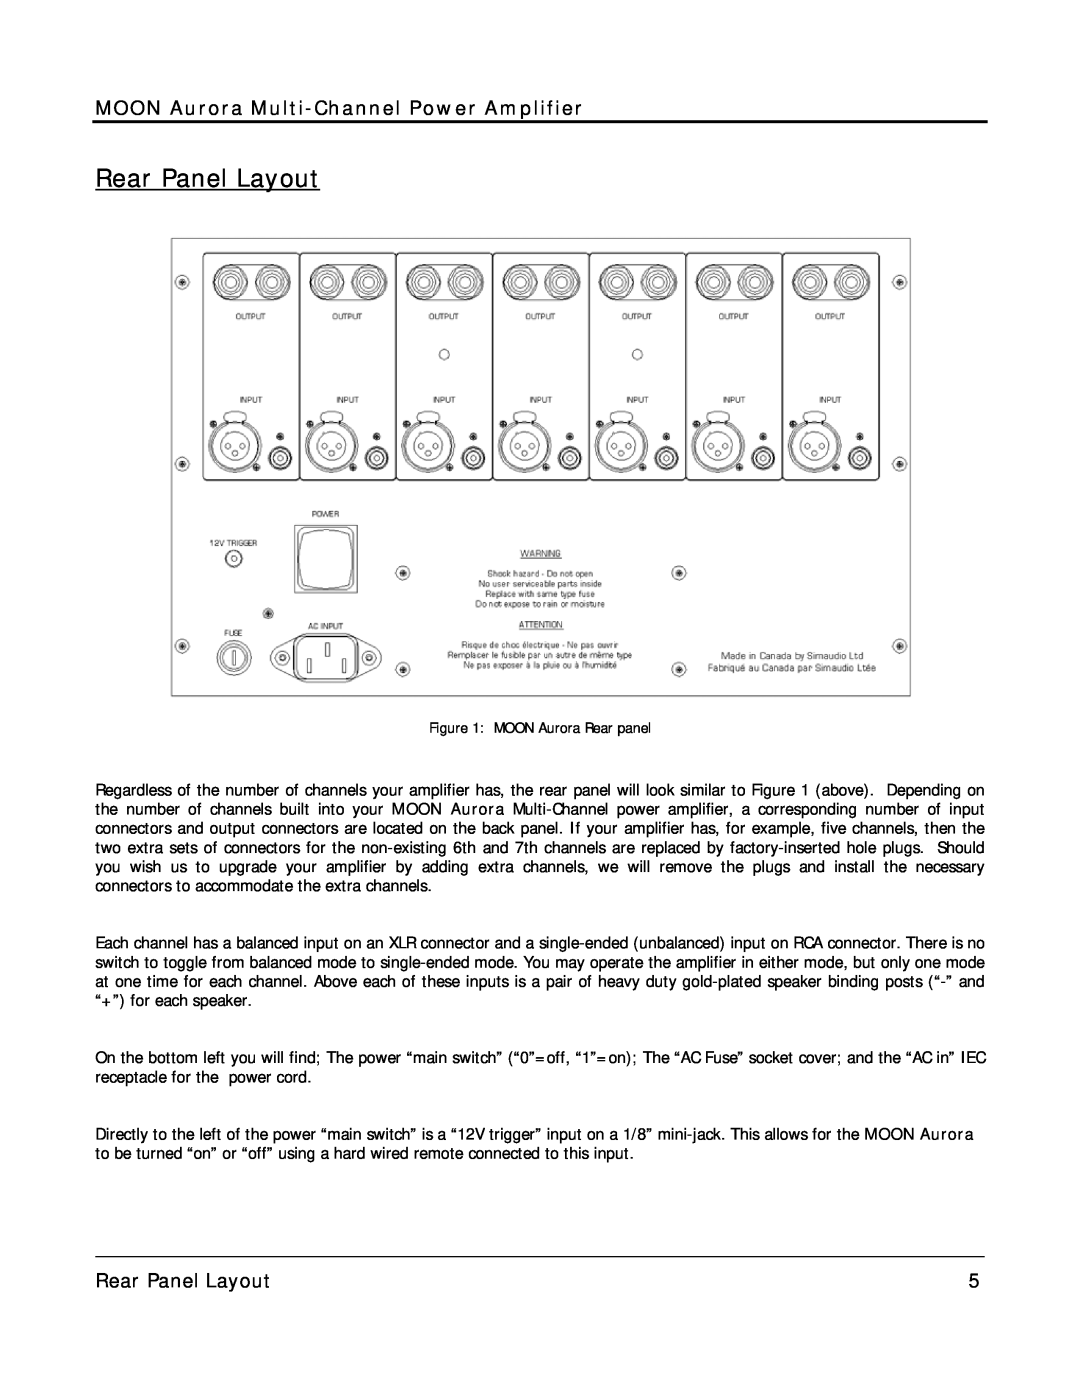 Simaudio AURORA owner manual Rear Panel Layout, MOON Aurora Multi-ChannelPower Amplifier, MOON Aurora Rear panel 